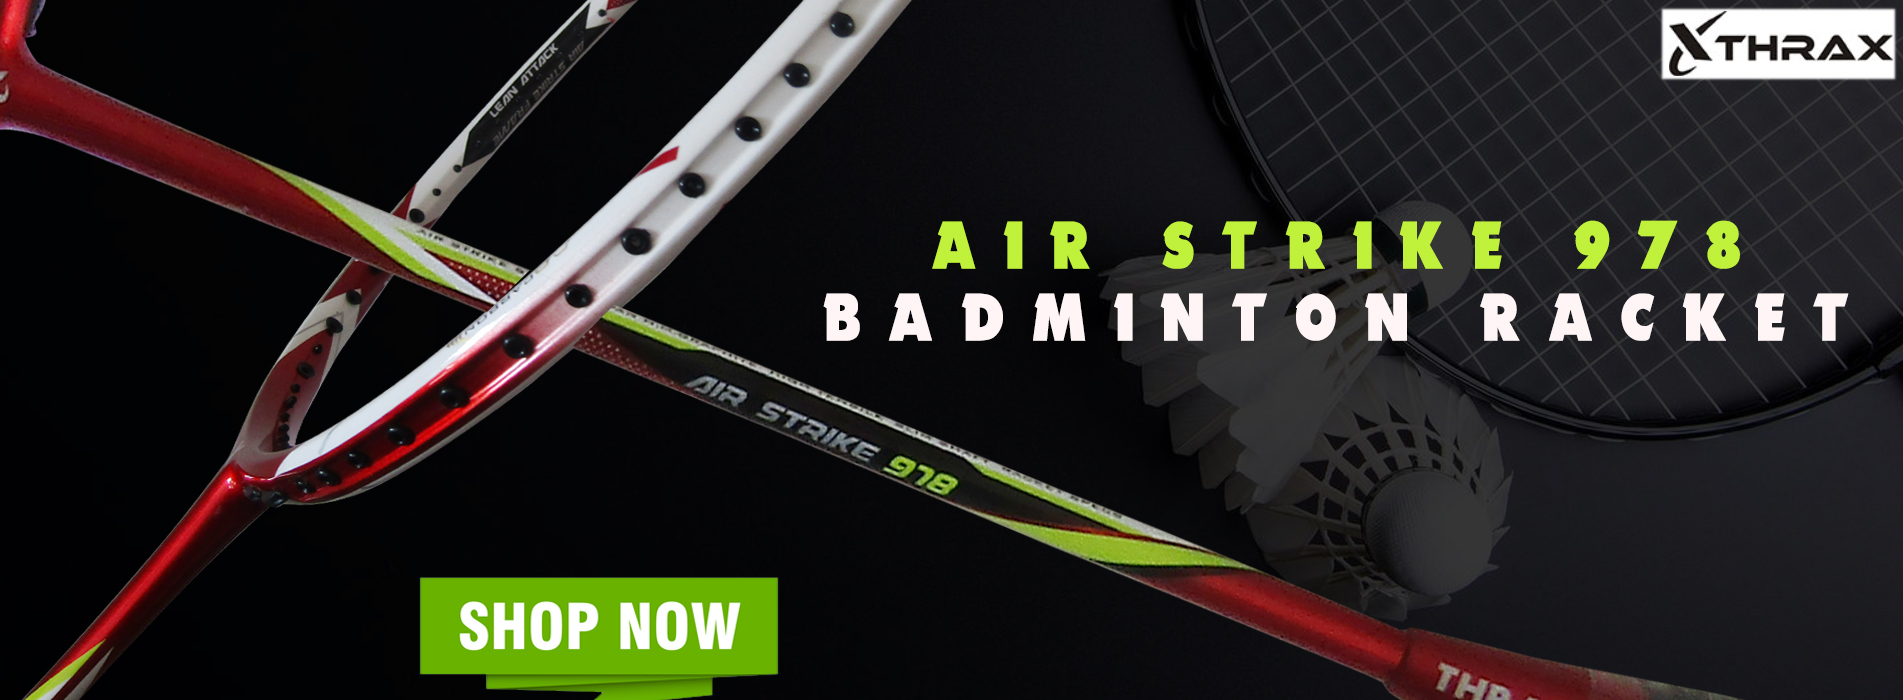 Thrax_Air_strike_978_badminton_racket